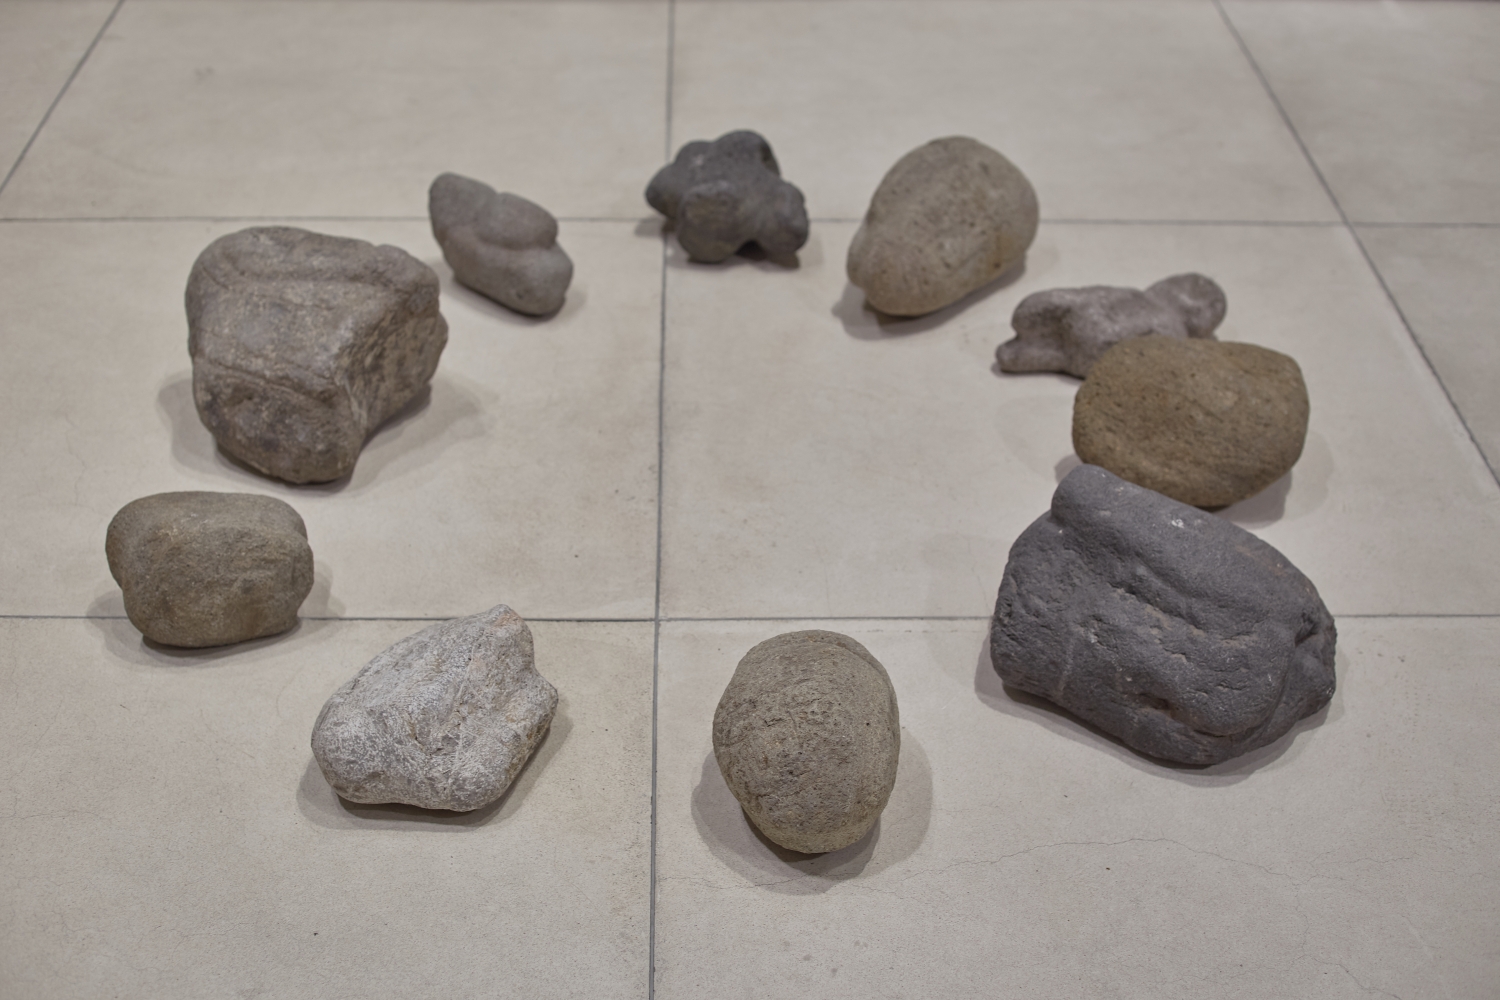 Diego&amp;nbsp;P&amp;eacute;rez
Piedras sin t&amp;iacute;tulo, 2015
Carved stone
Variable dimensions
10 elements

&amp;nbsp;